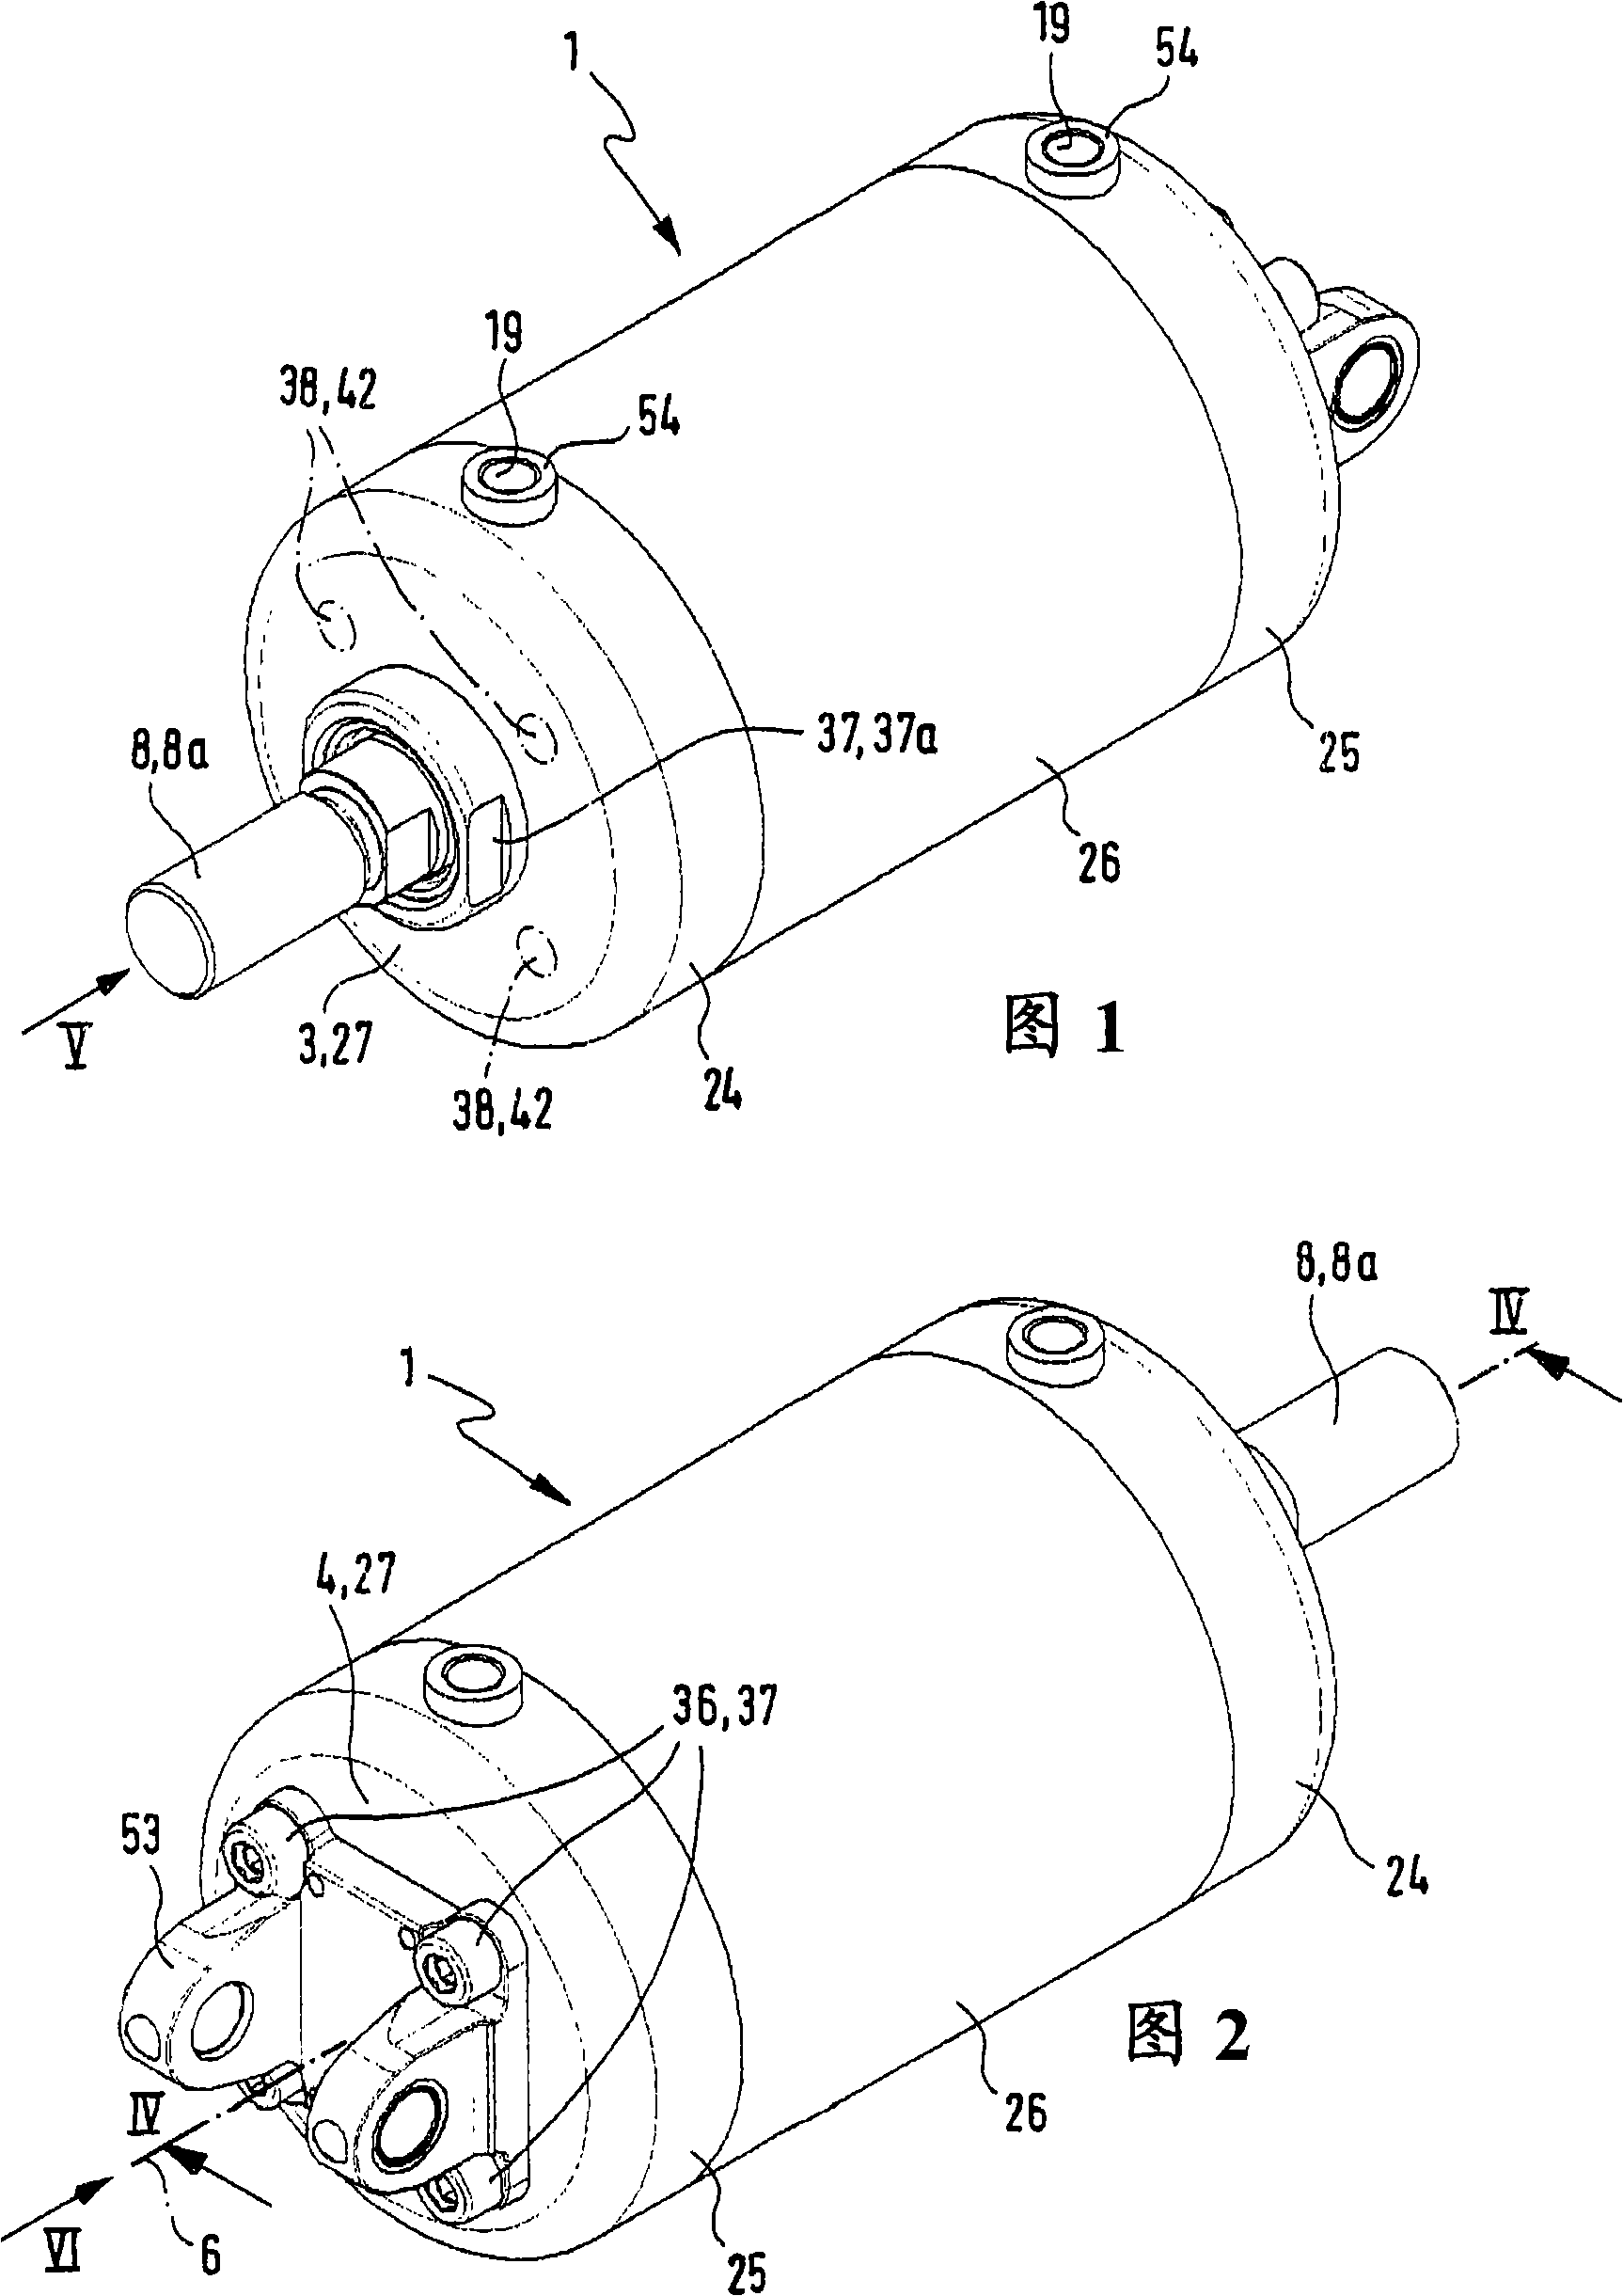 Fluid operated linear motor